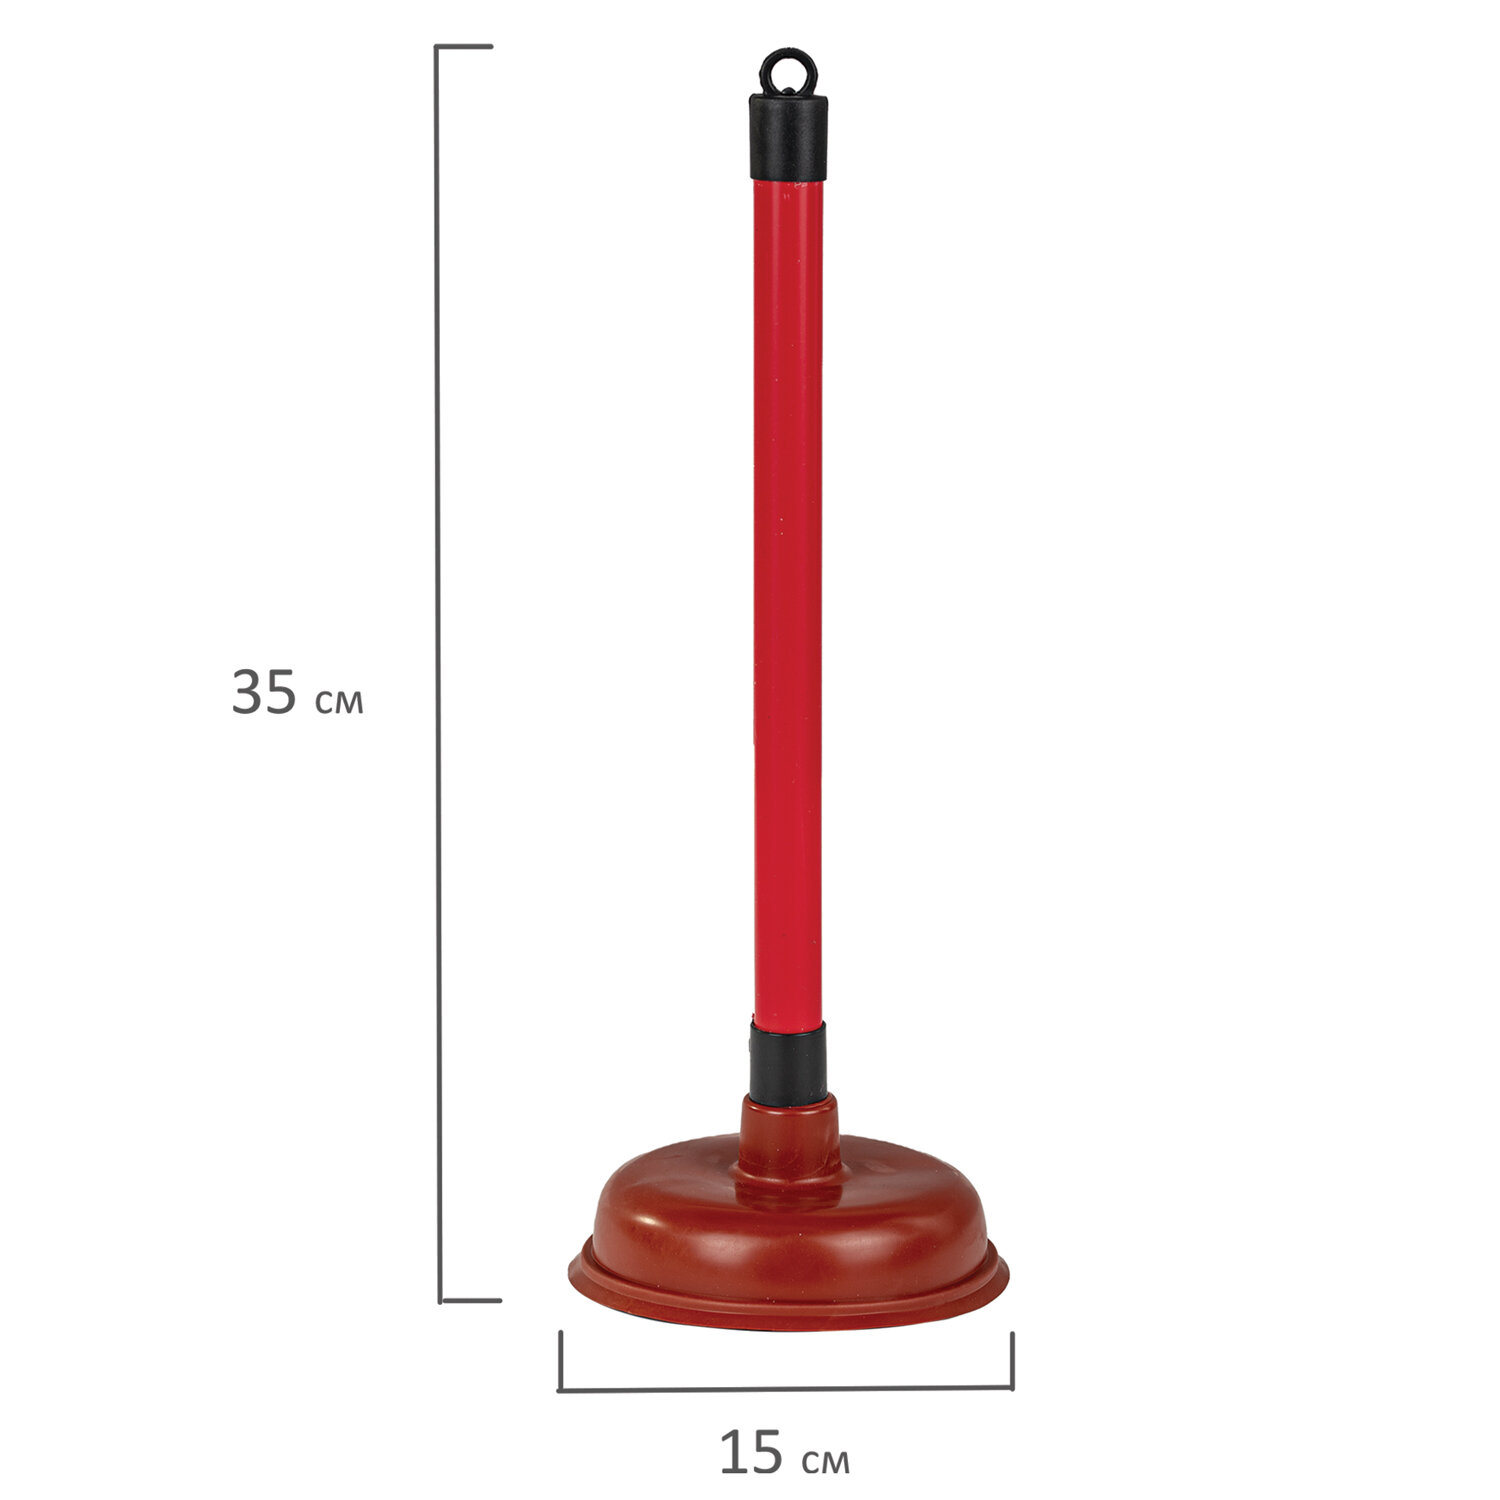 Вантуз ЛАЙМА, диаметр 15 см, высота 35 см, 603635